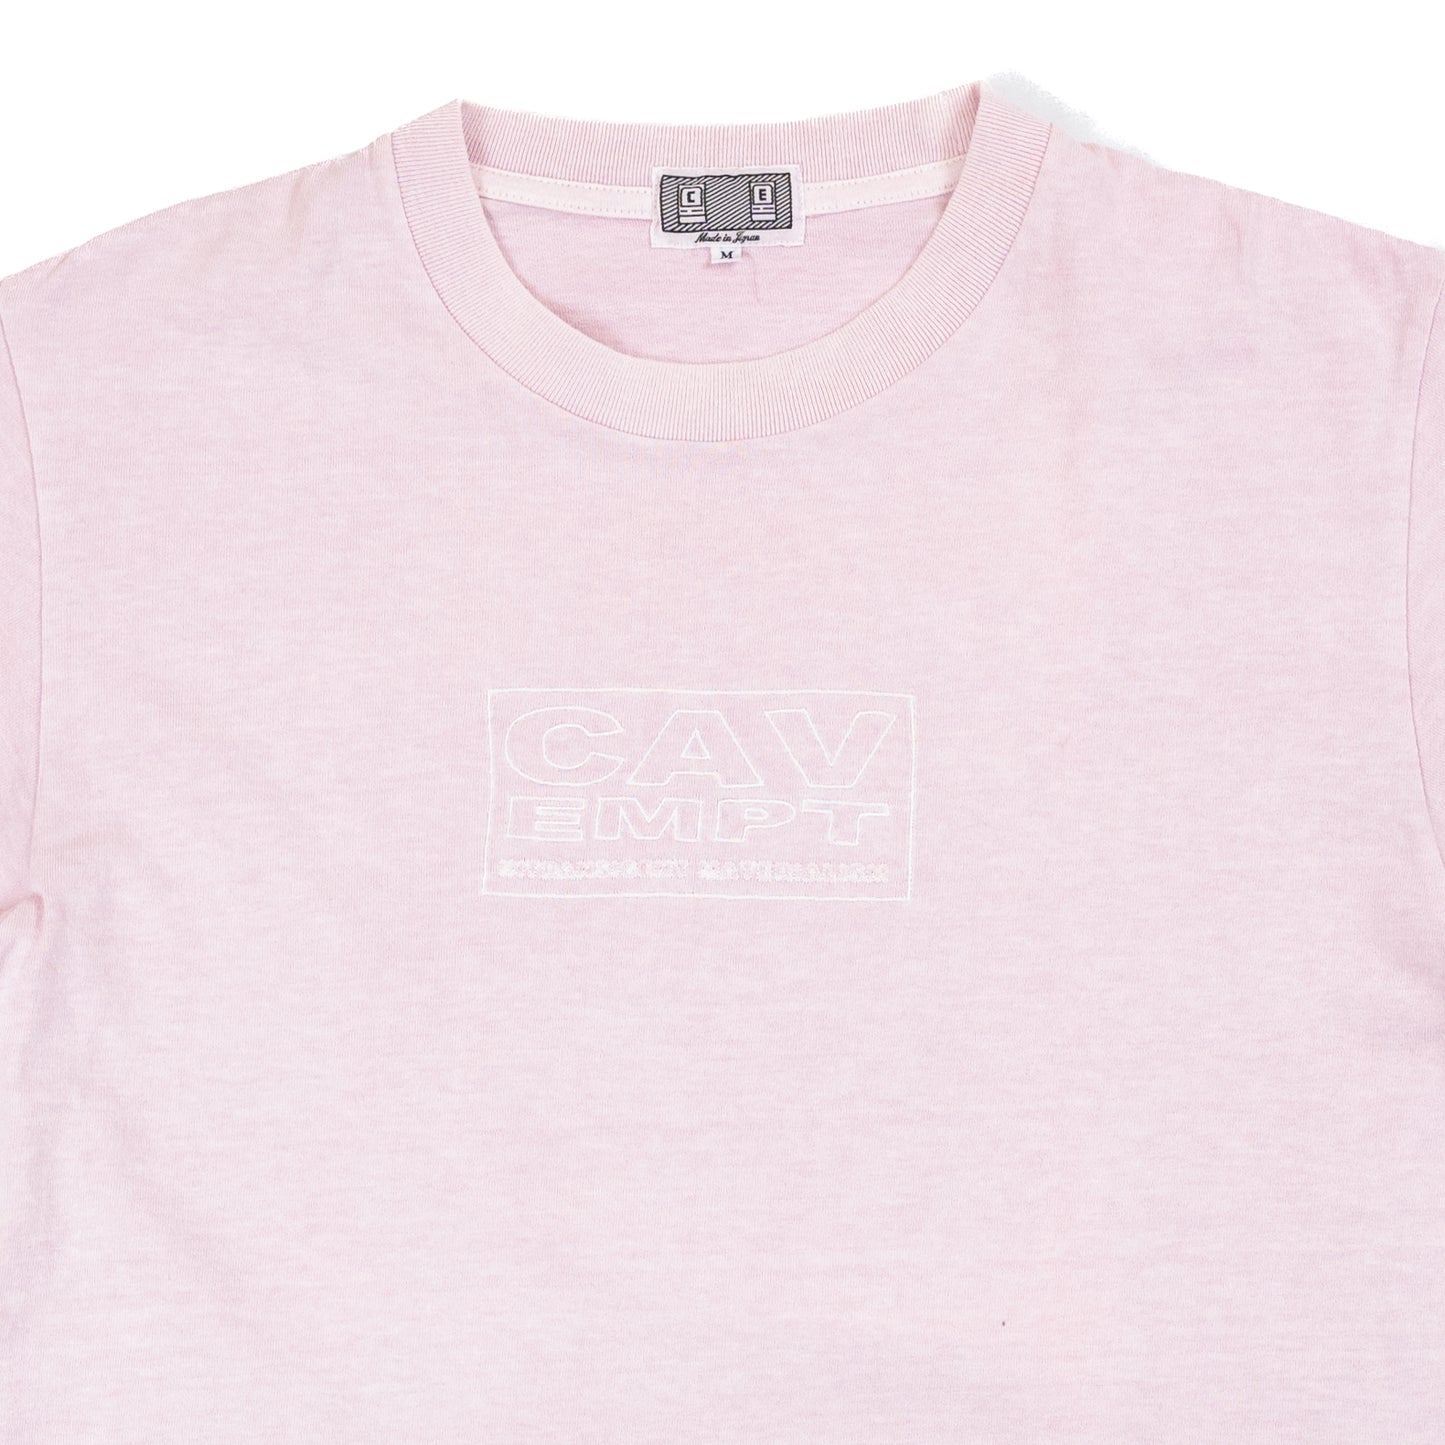 Cav Empt x Beauty & Youth Overdye T-Shirt (2016AW)